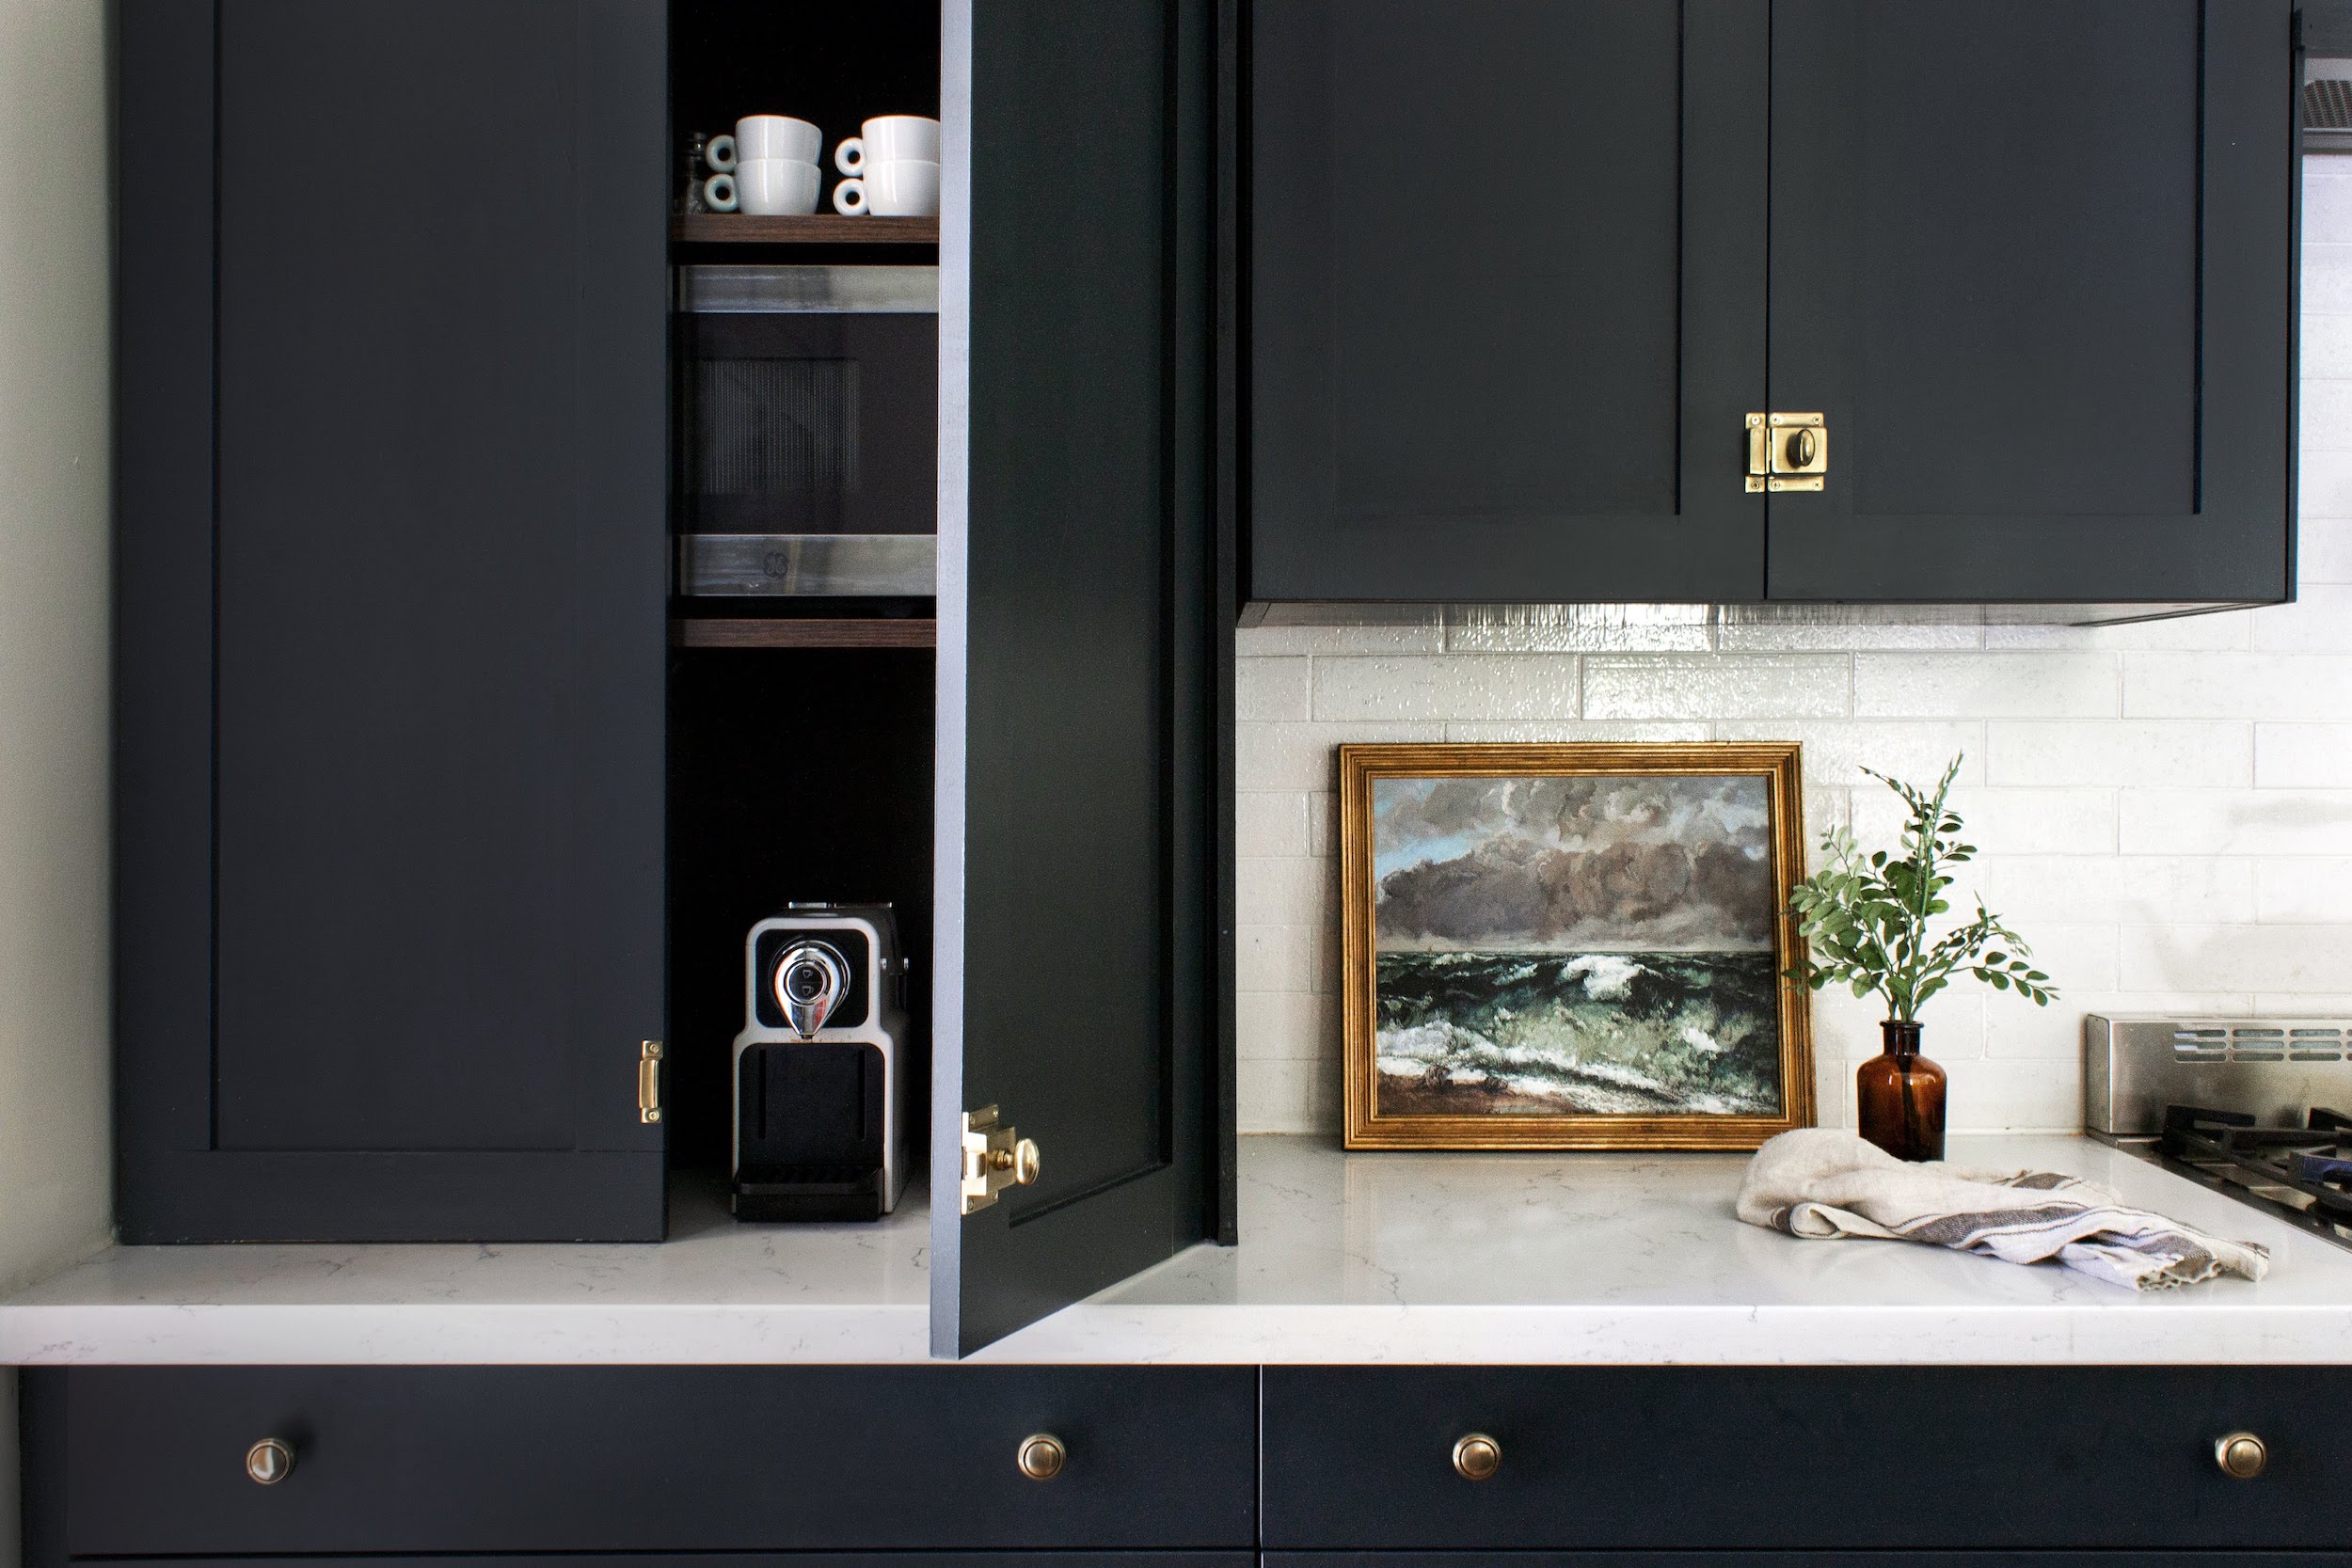 Black Semihandmade kitchen cabinets and appliance garage